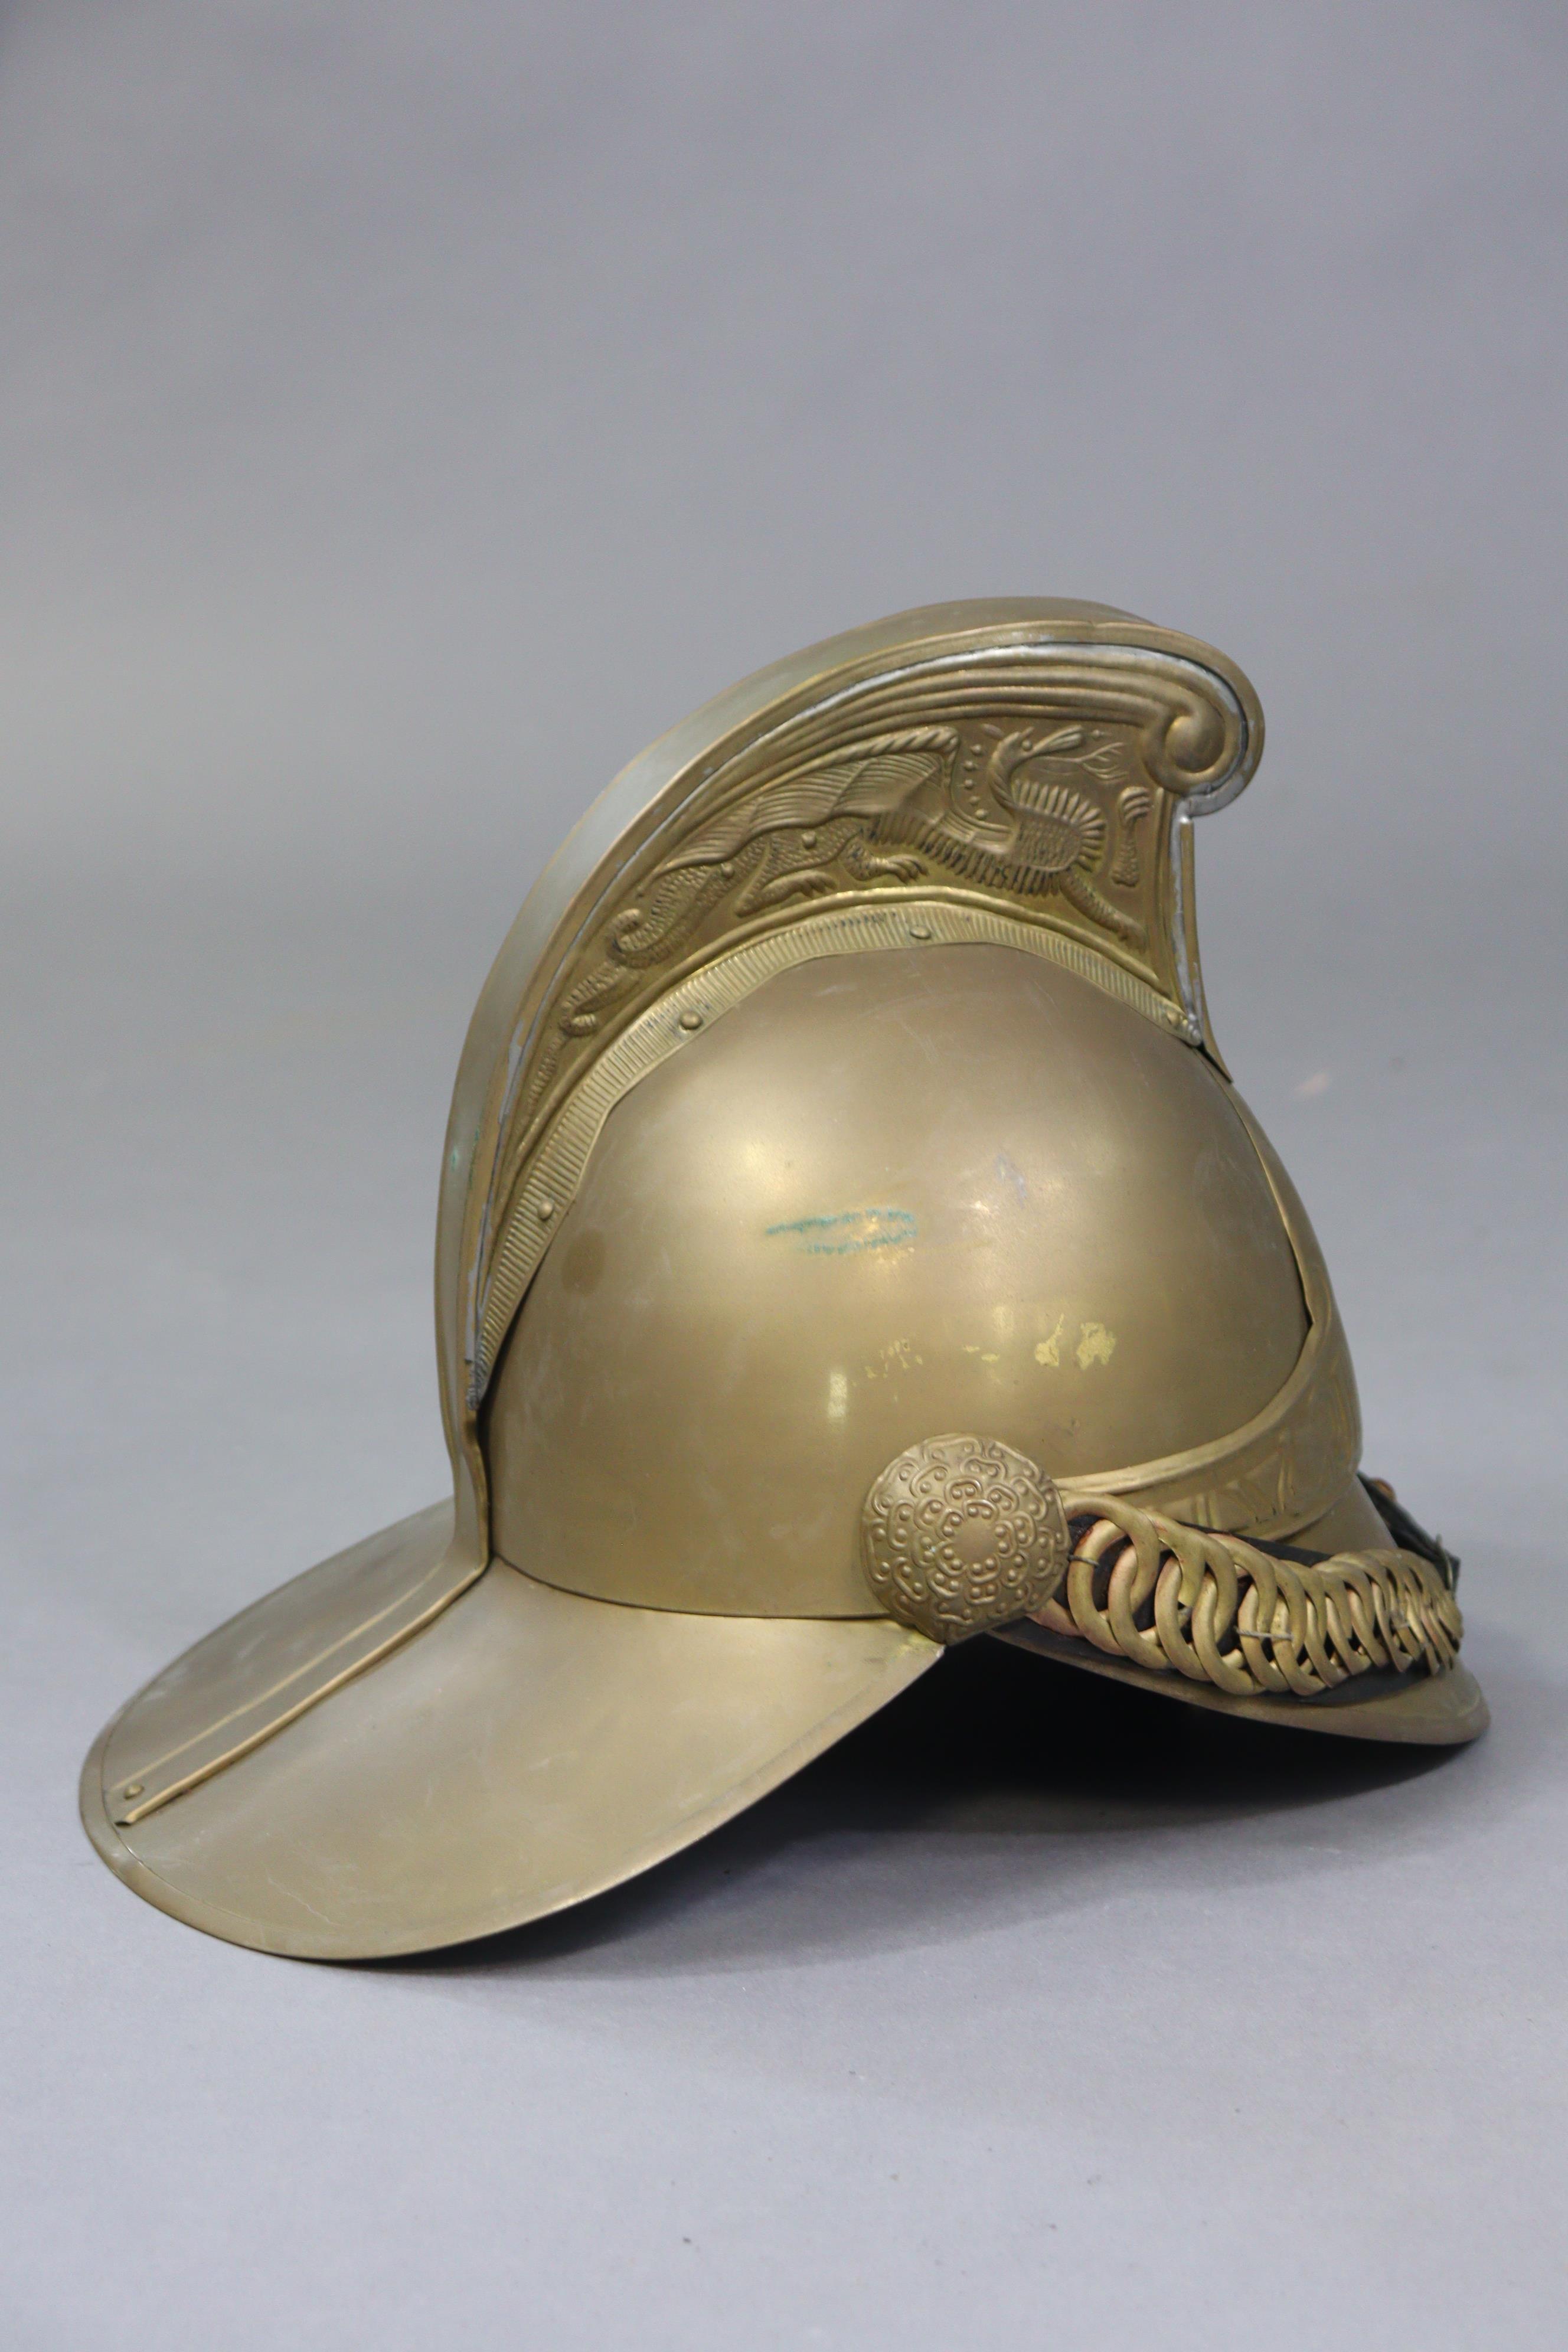 A replica Merryweather pattern brass fire men’s helmet. - Image 3 of 4